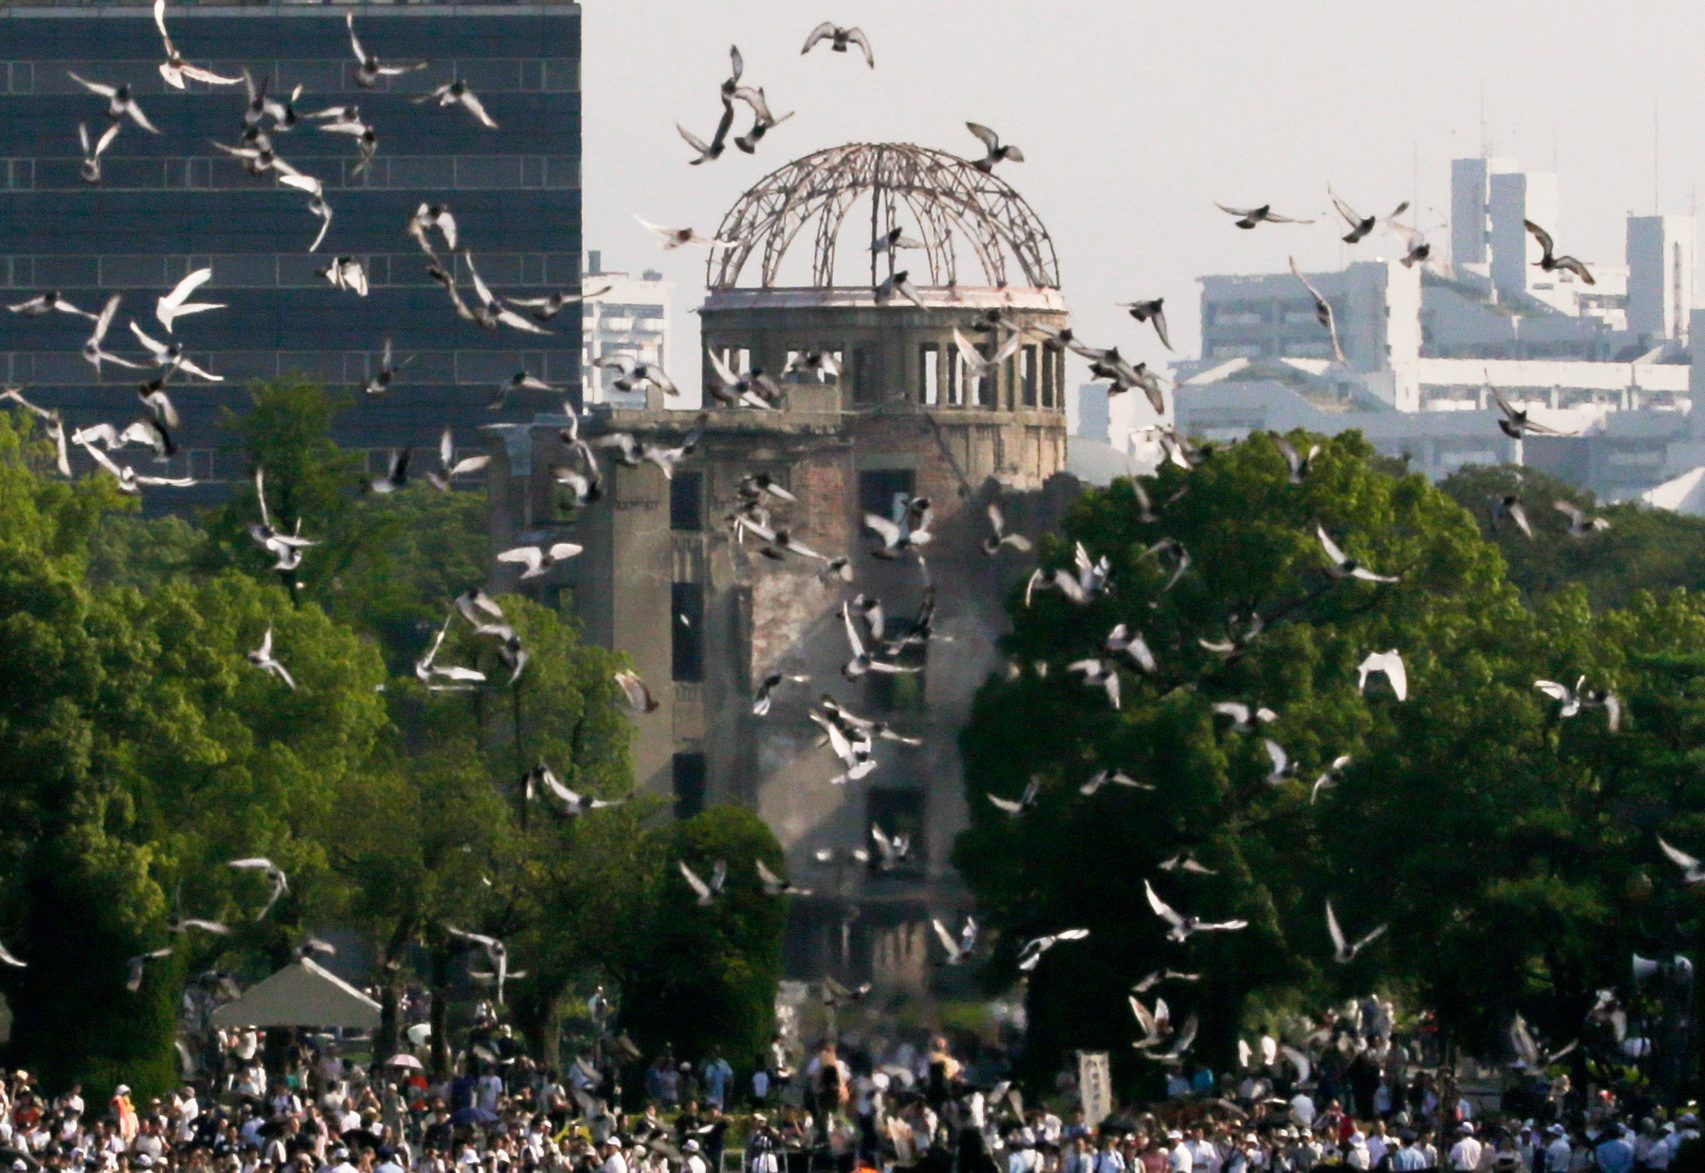 Obama to make historic visit to Hiroshima